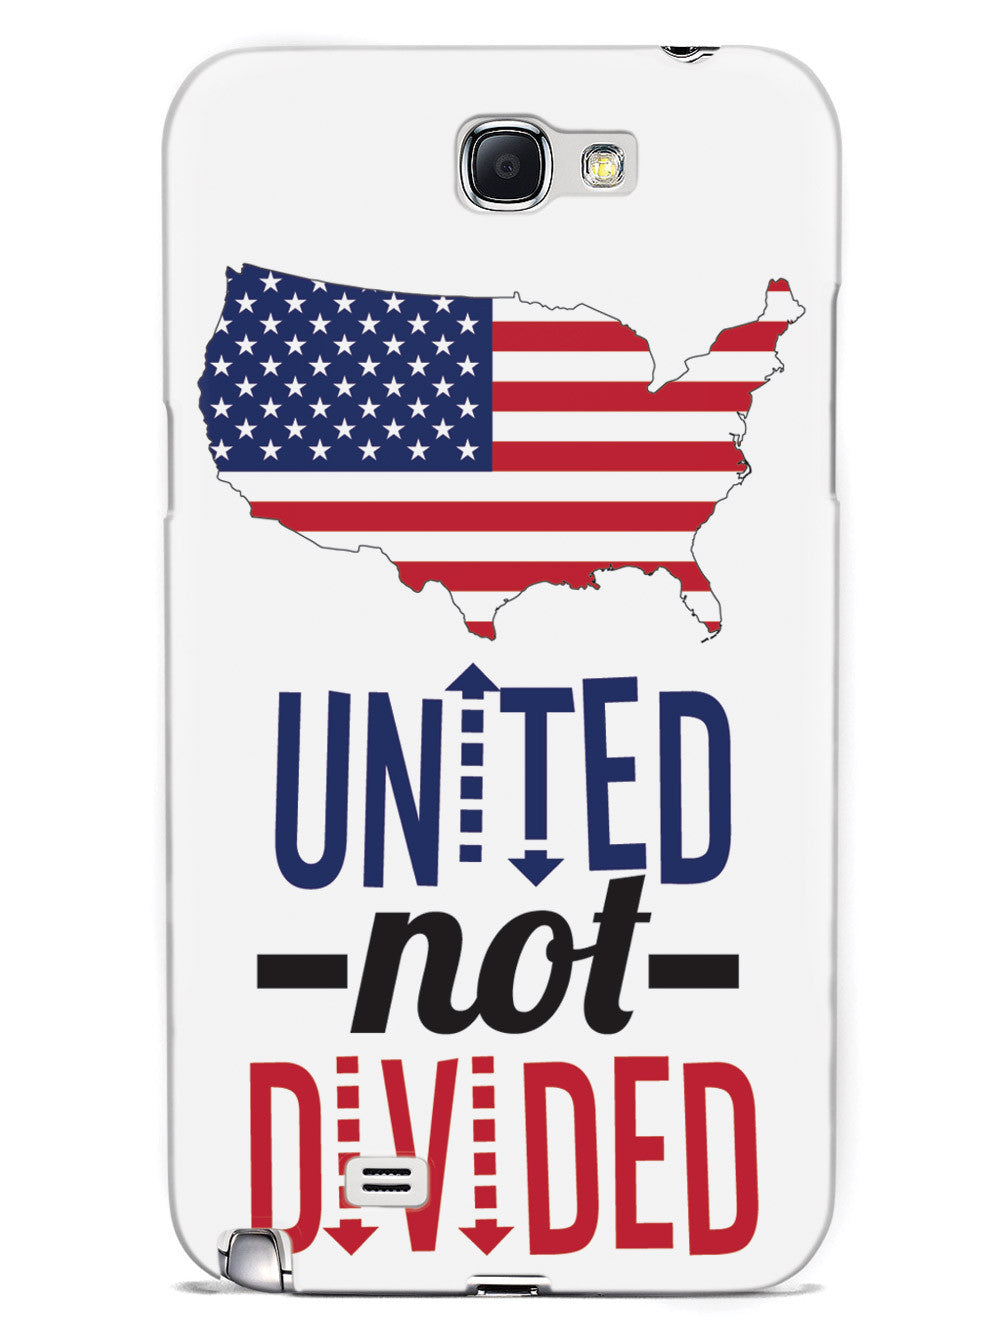 USA - United NOT Divided - White Case